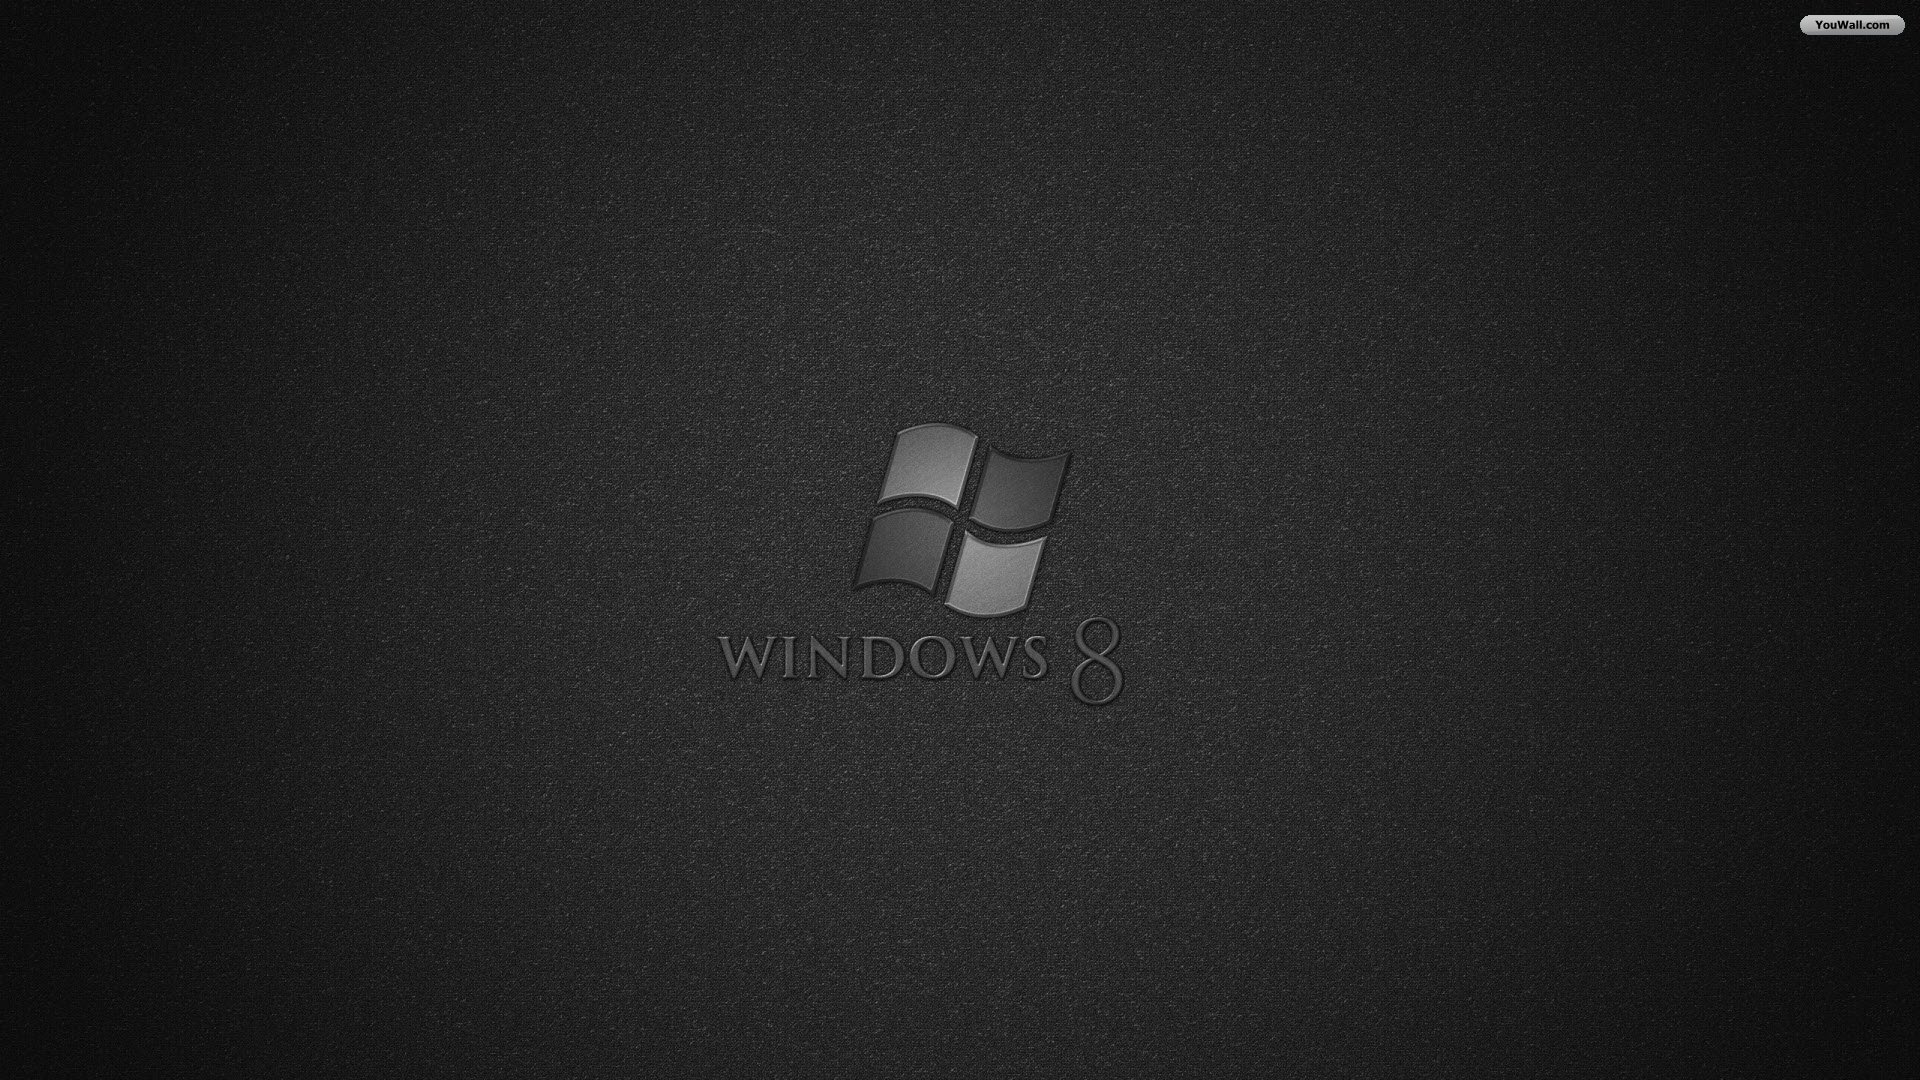 [42+] Windows 8 Wallpaper 1920x1080 - WallpaperSafari